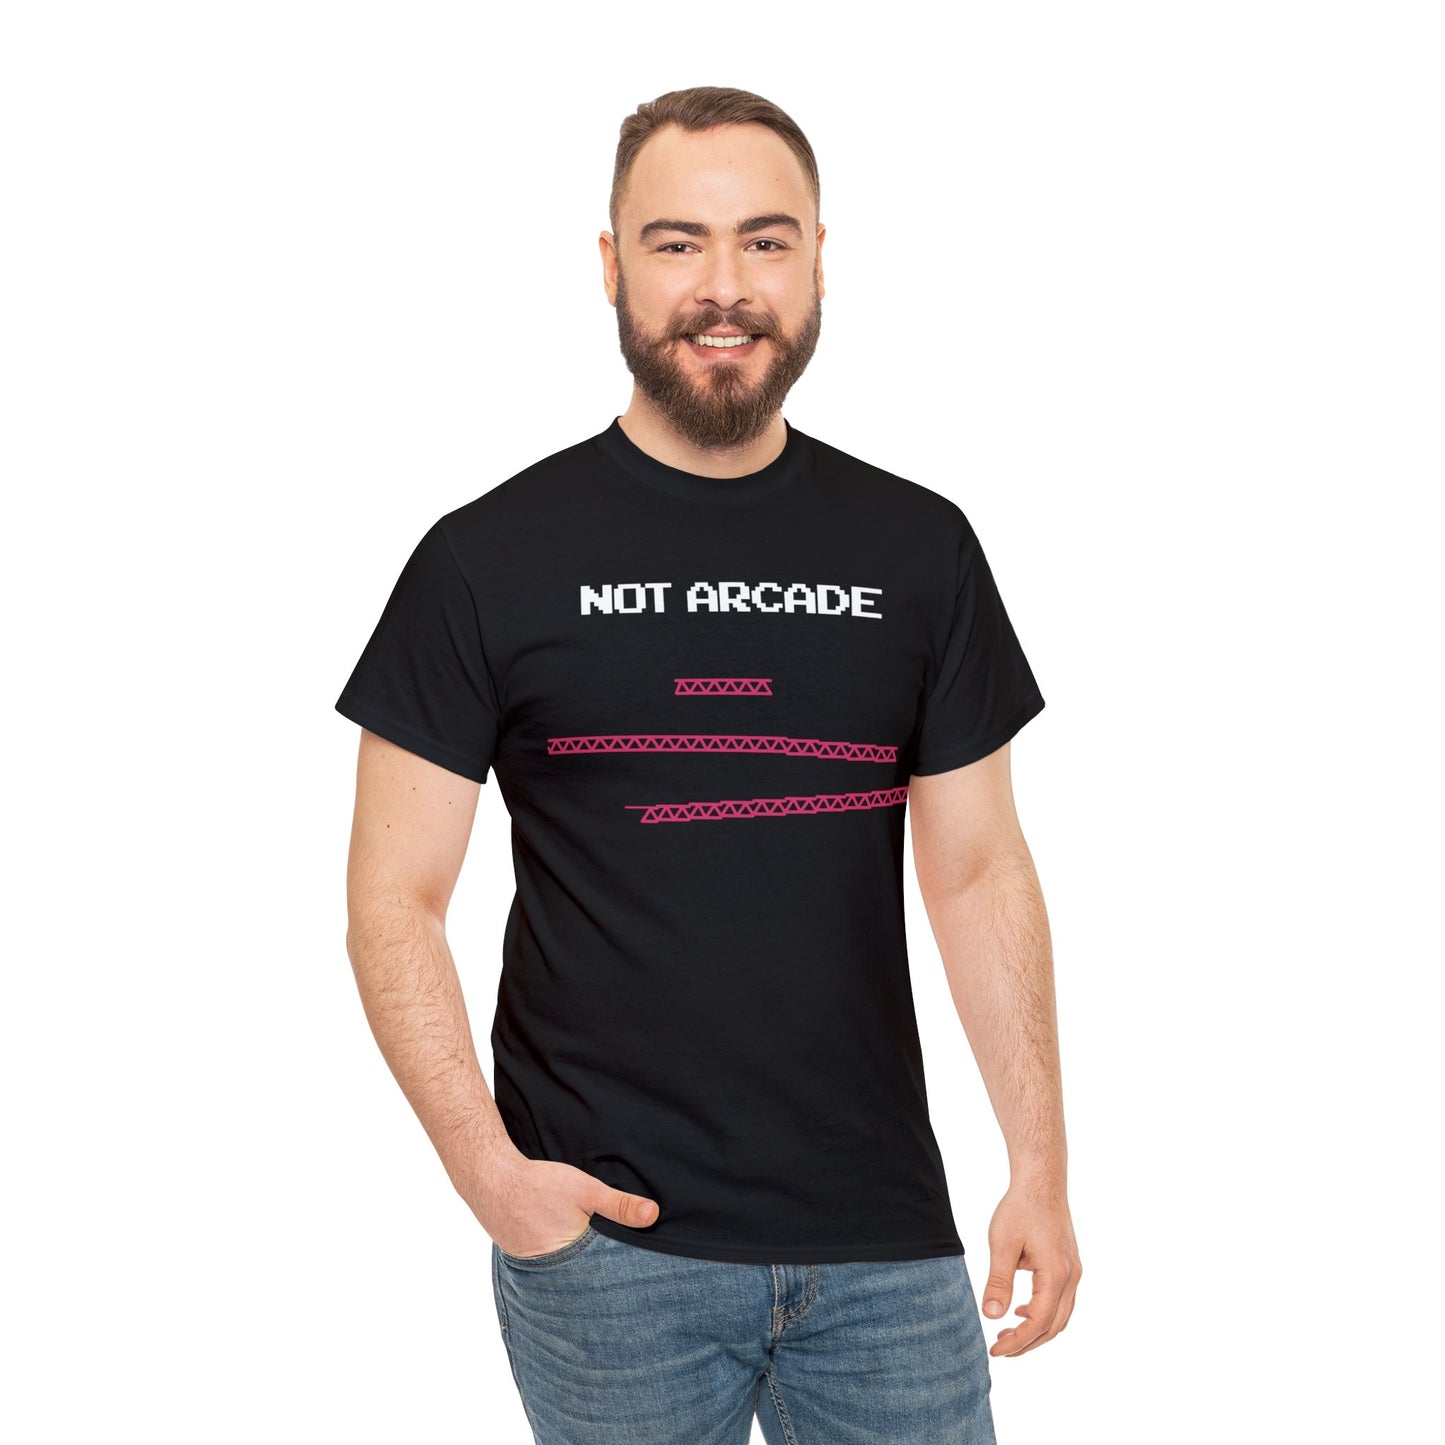 NOT ARCADE. (educational t-shirt)